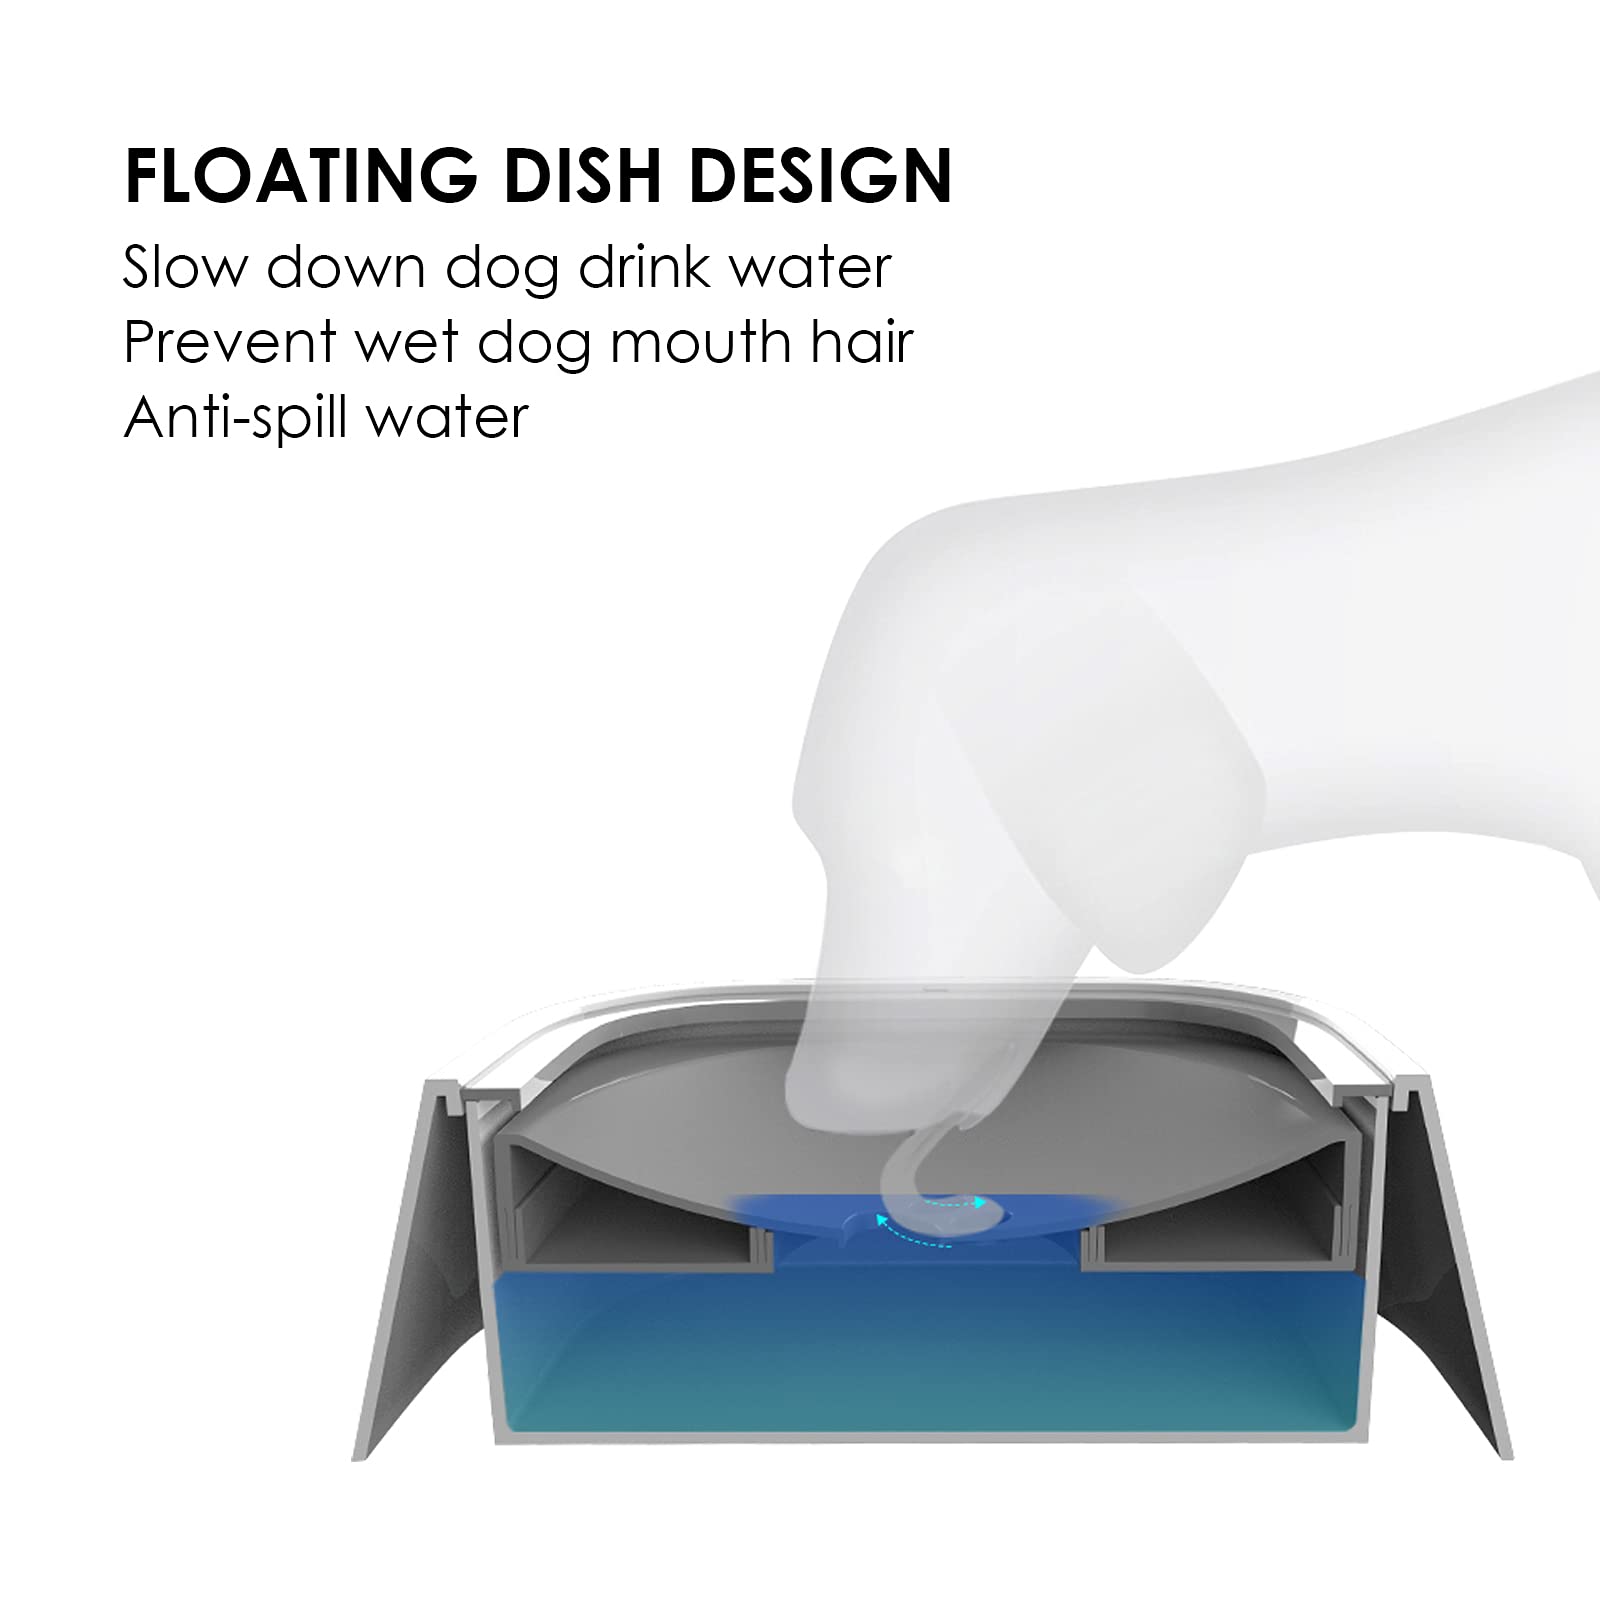 Splash Proof Pet Water Bowl